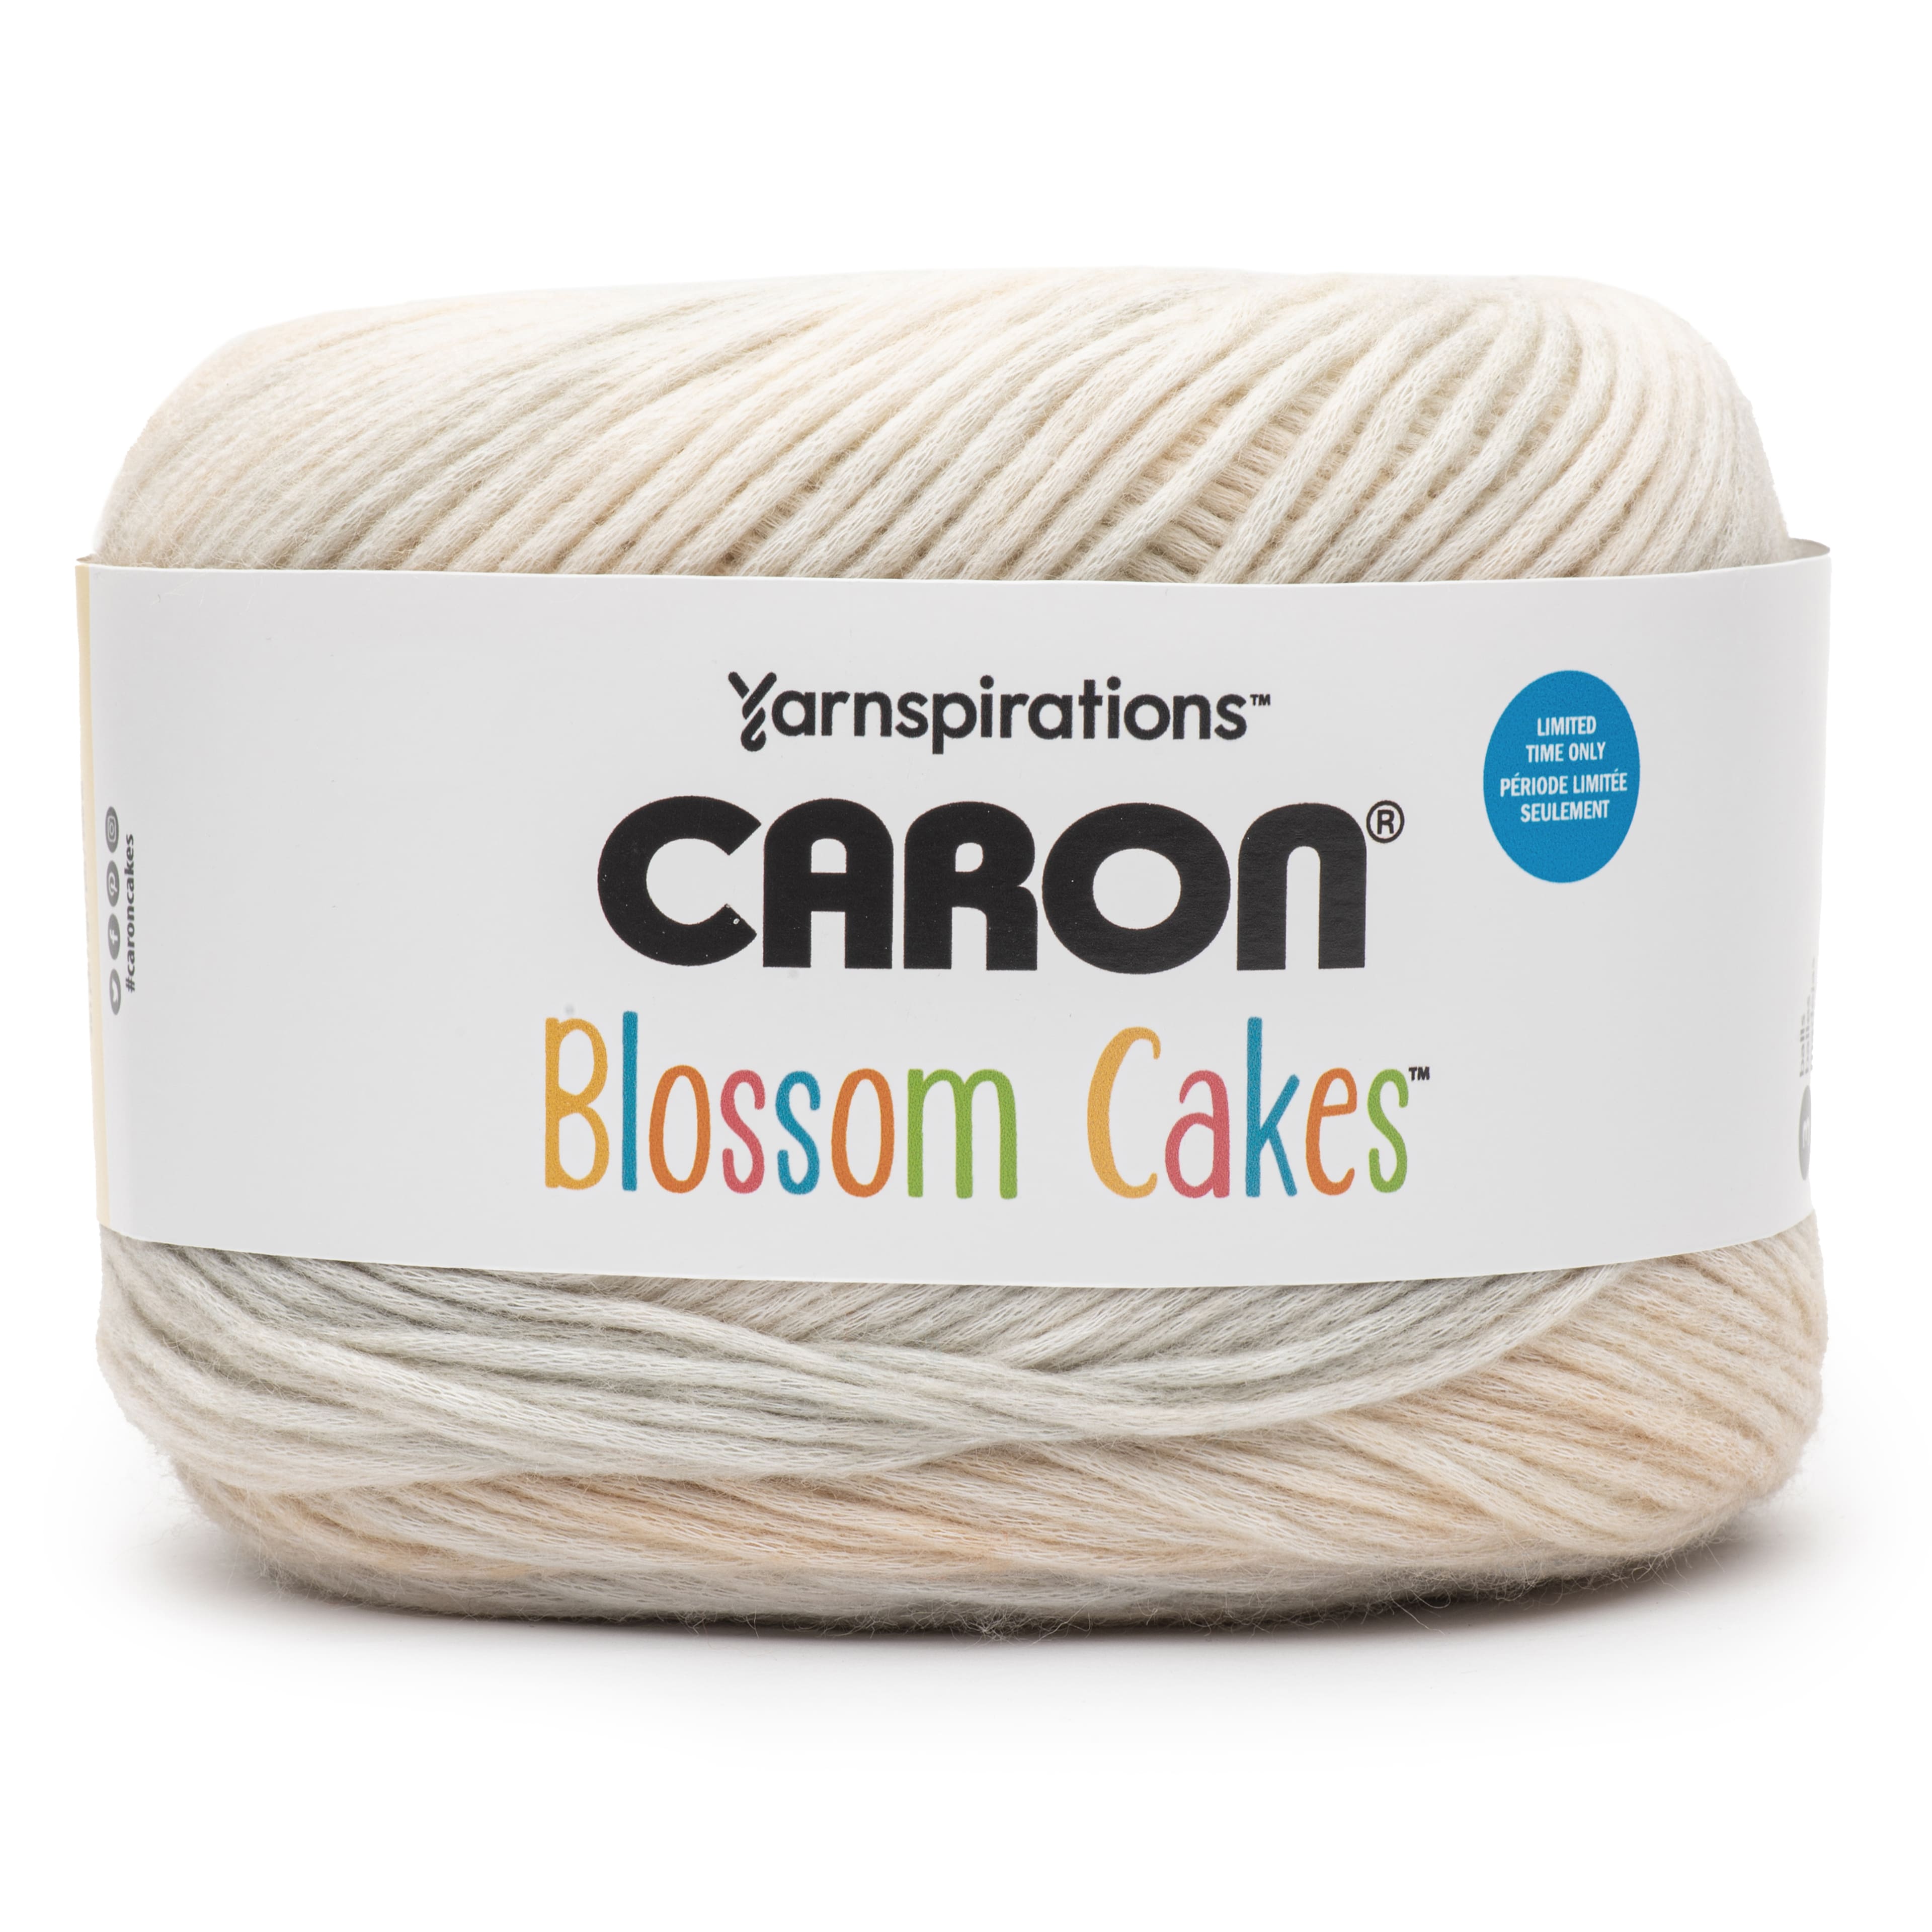 Caron Blossom Cakes Yarn, Yarnspirations